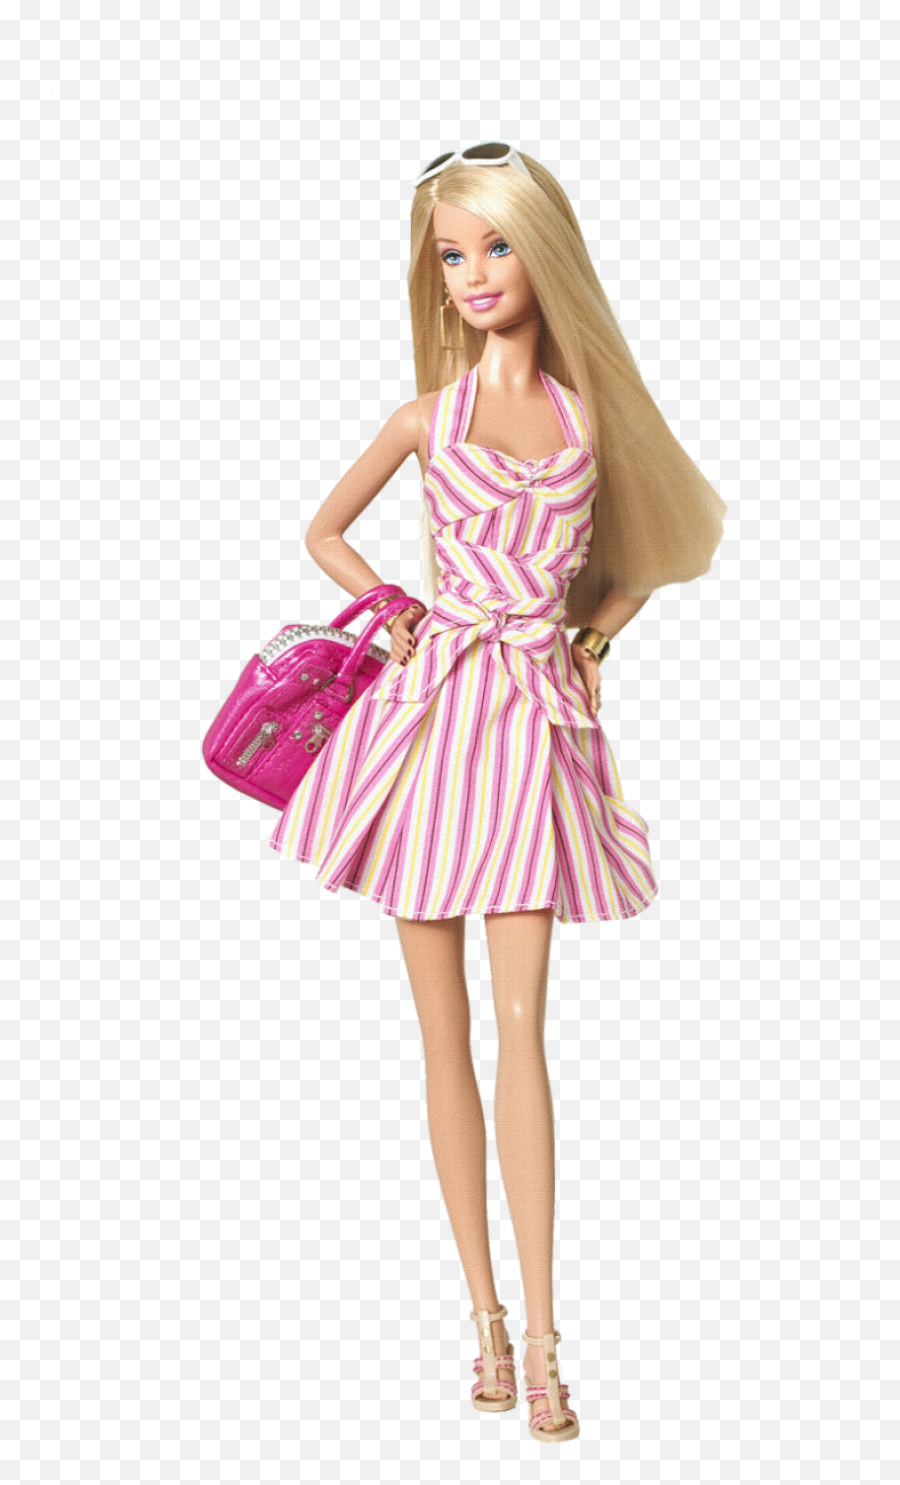 Barbie Doll Png Image - Barbie Doll Transparent Background,Doll Png